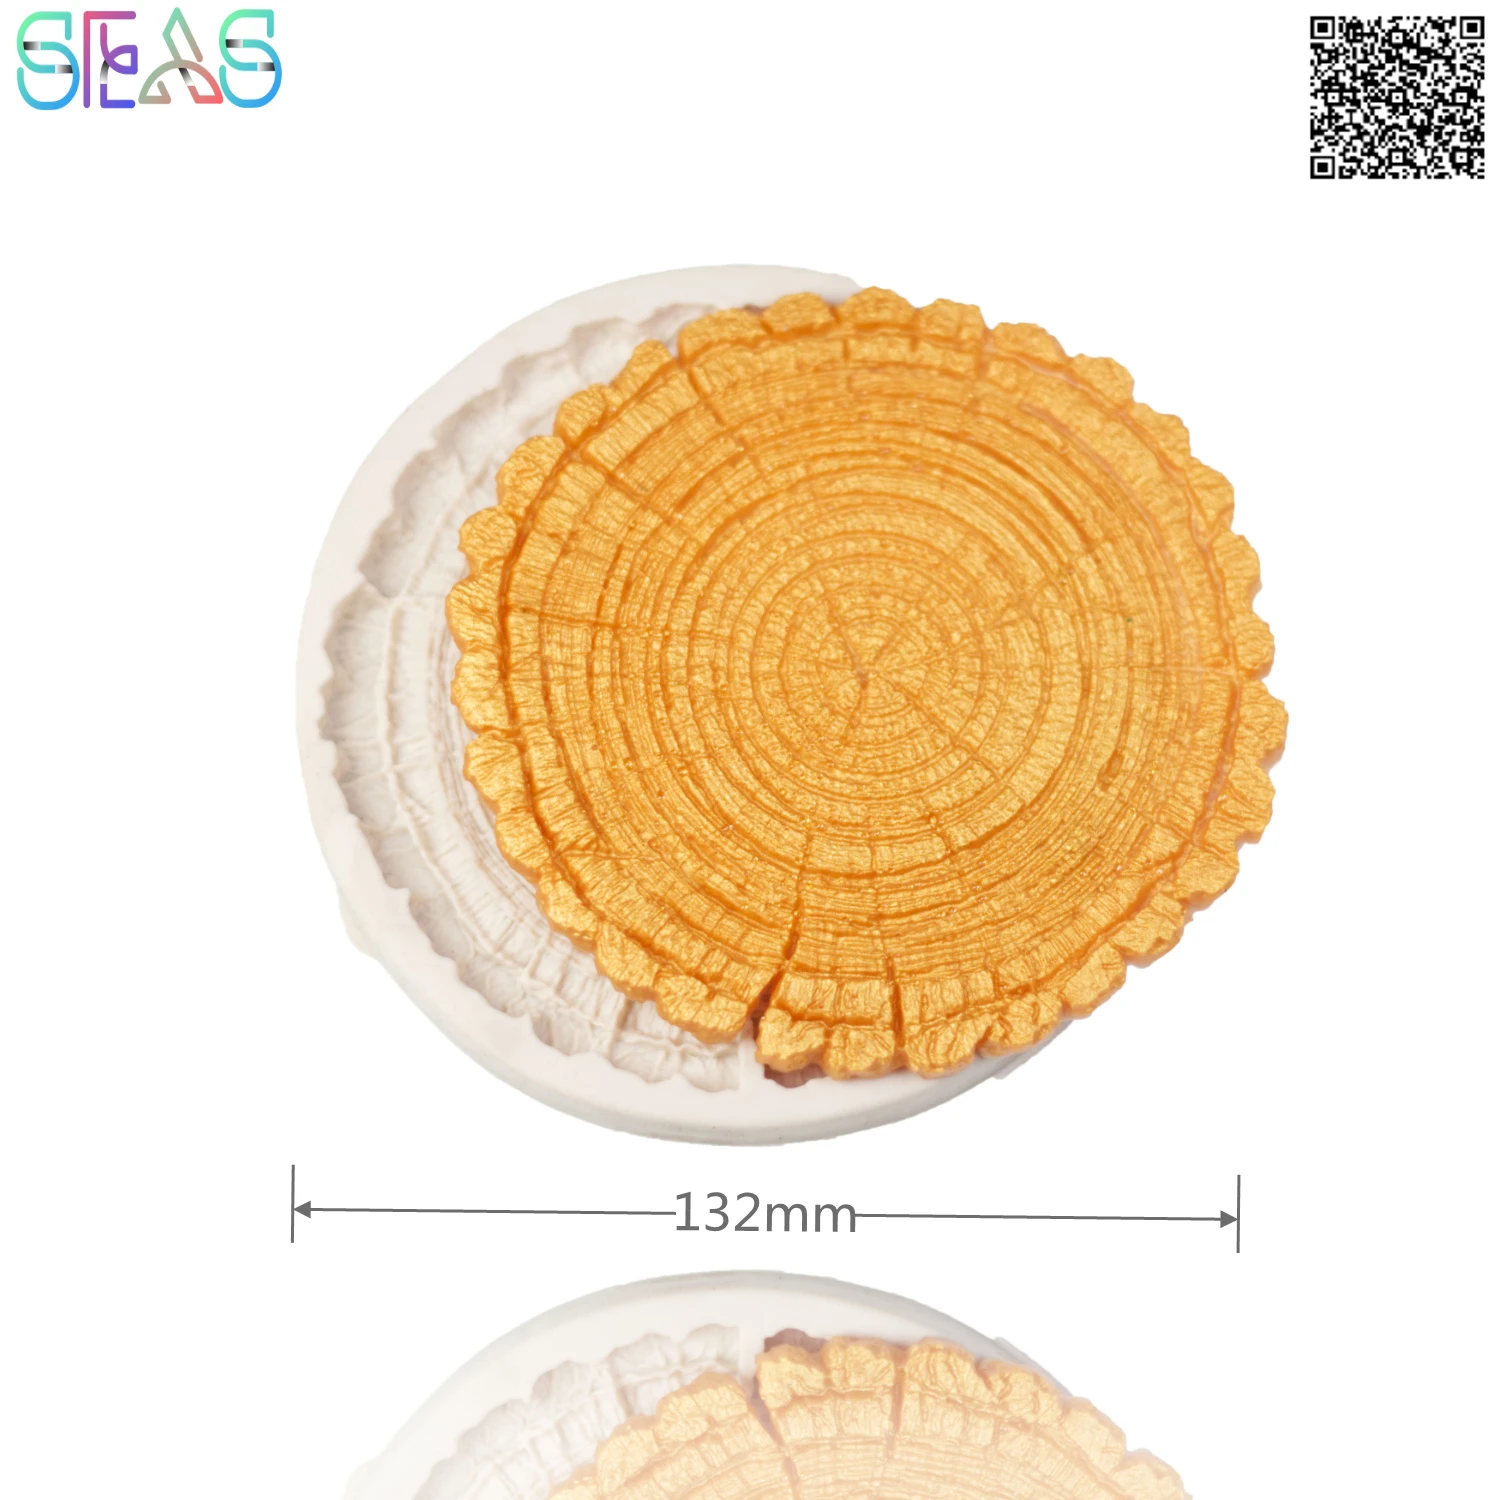 New DIY Cake Decorating Mold Tree Veiner Silicone Cake Mold Sugar Art Mold Fondant Mold Fondant Cake Decorating Tools